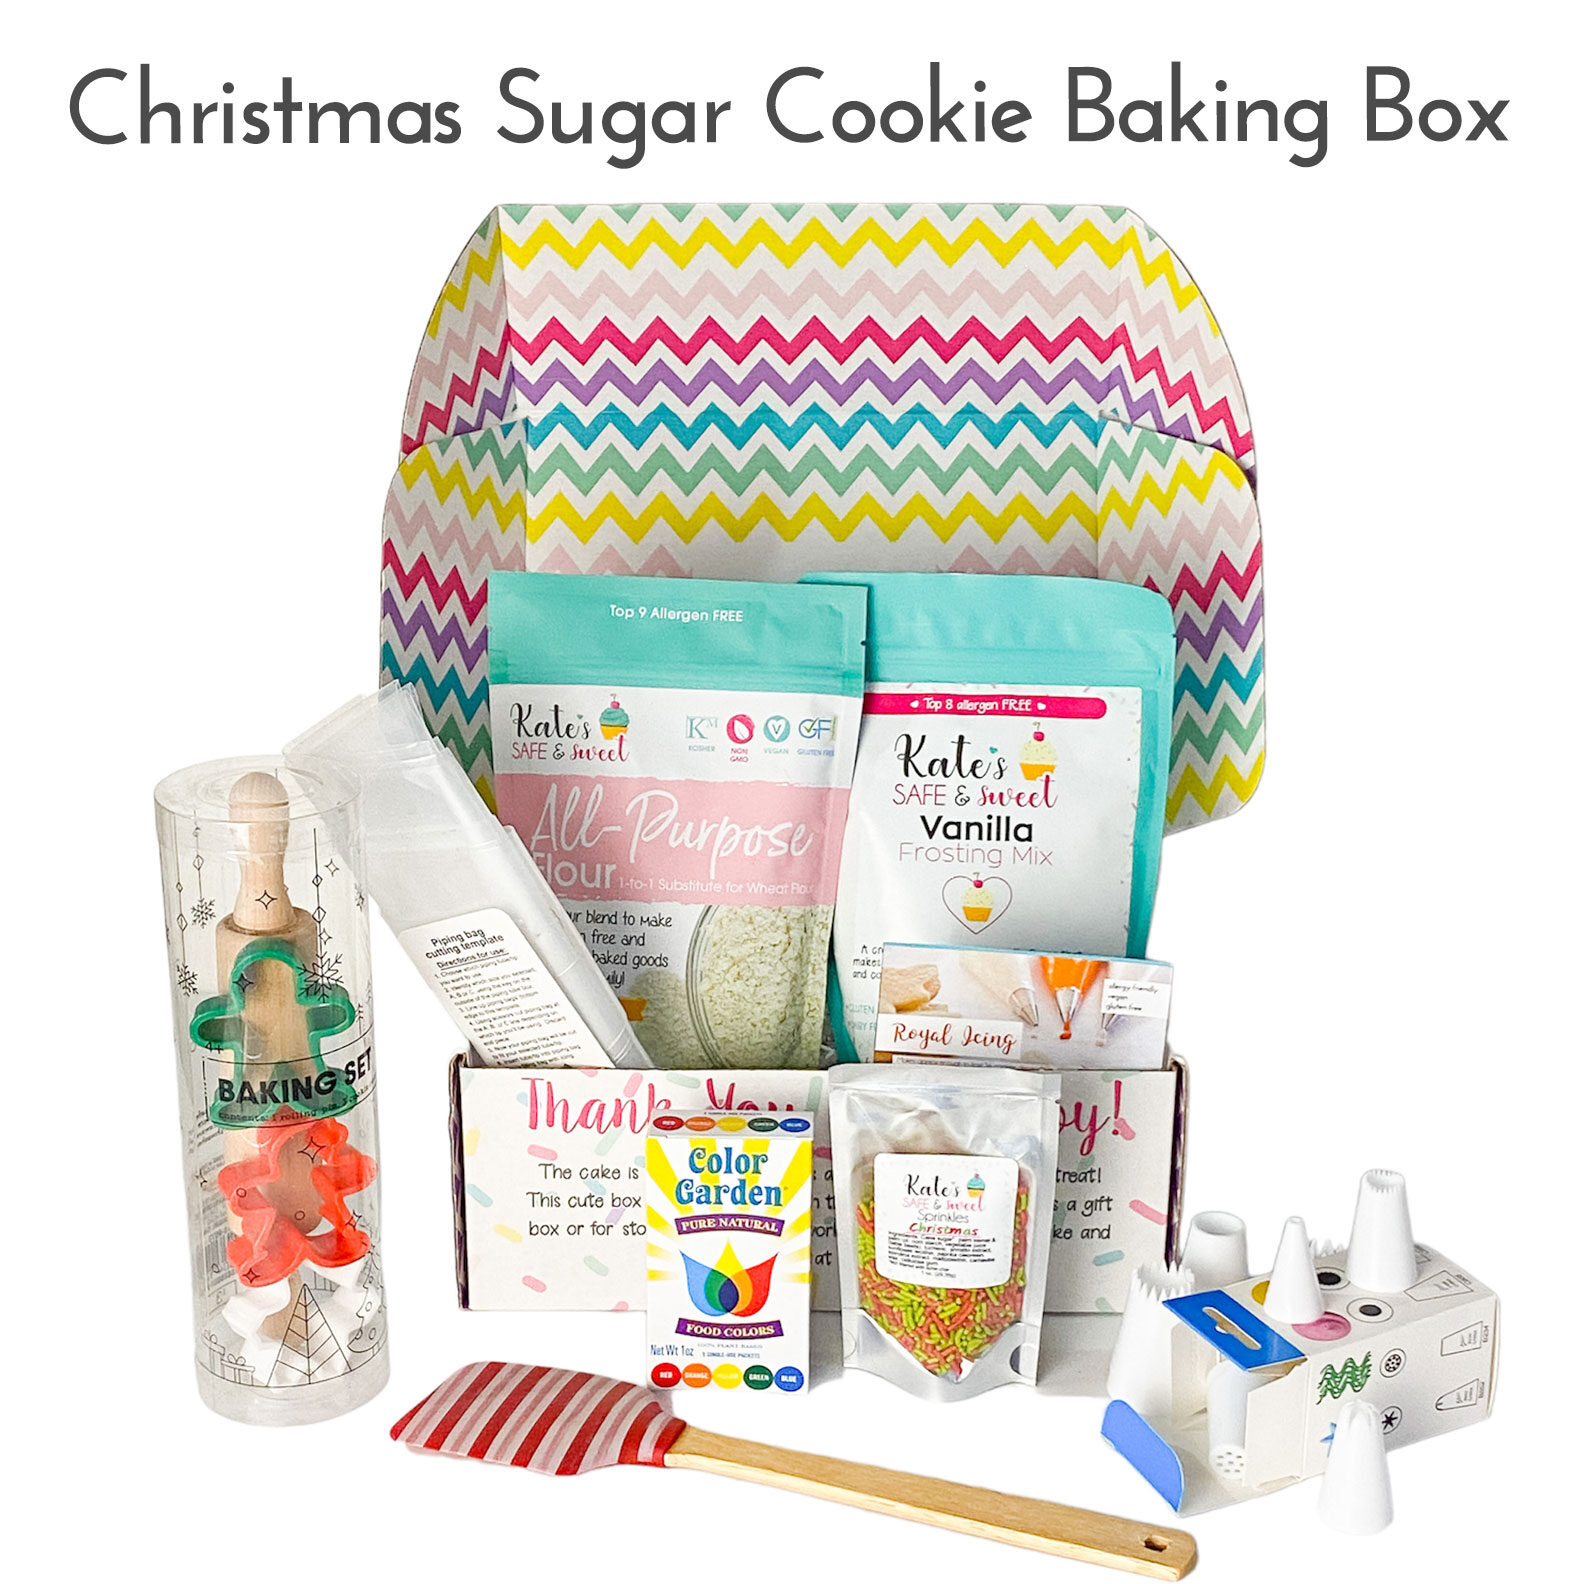 Kates-Safe-and-Sweet---Christmas-Sugar-Cookie-Baking-Box